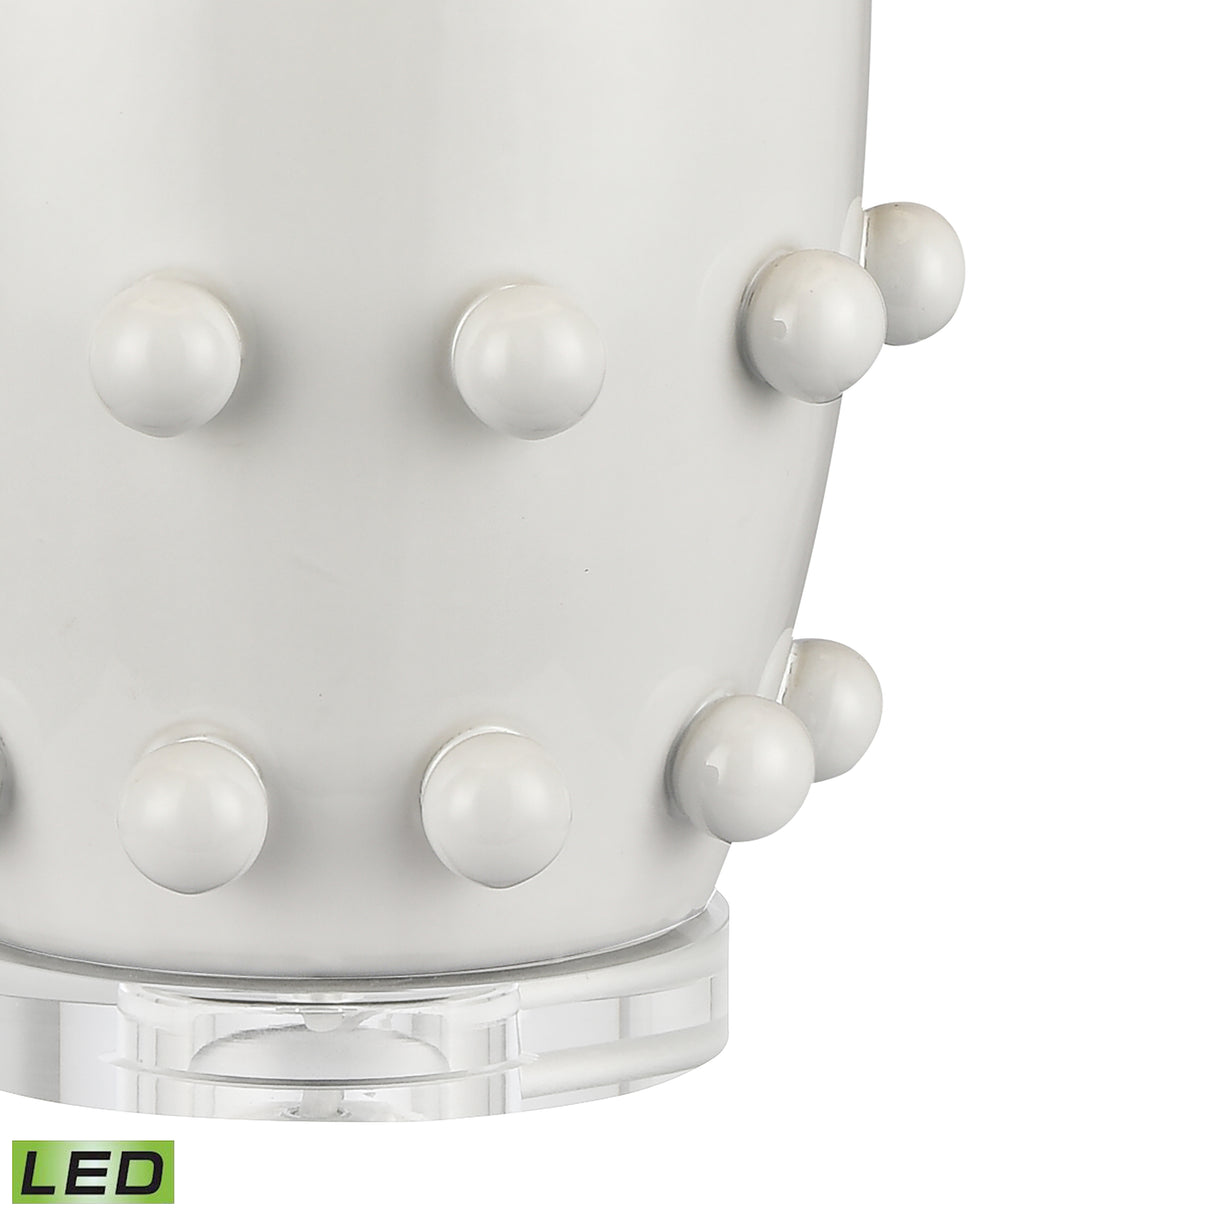 Elk H0019-9501-LED Torny 28'' High 1-Light Table Lamp - White - Includes LED Bulb